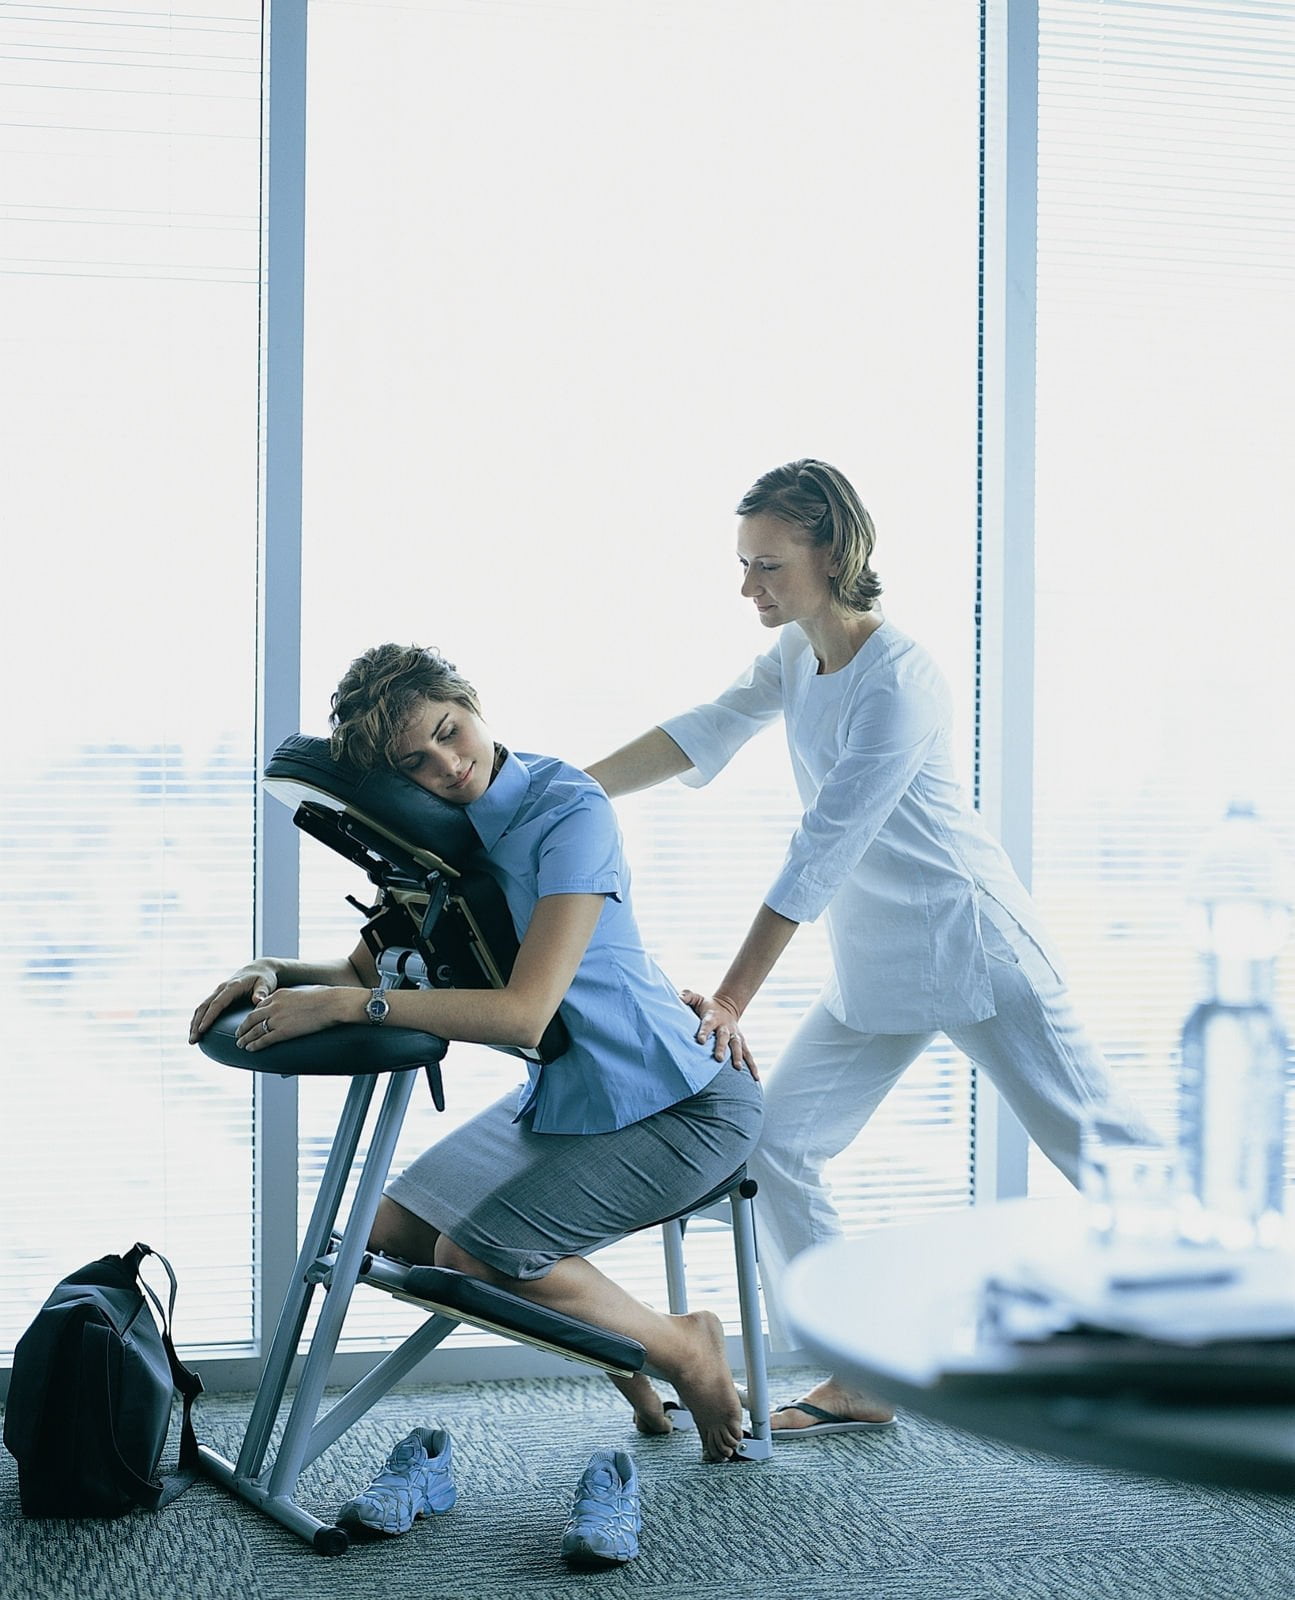 https://www.advancedclinicmassage.com/wp-content/uploads/2015/02/healthy-living-Corporate-Chair-Massage.jpg